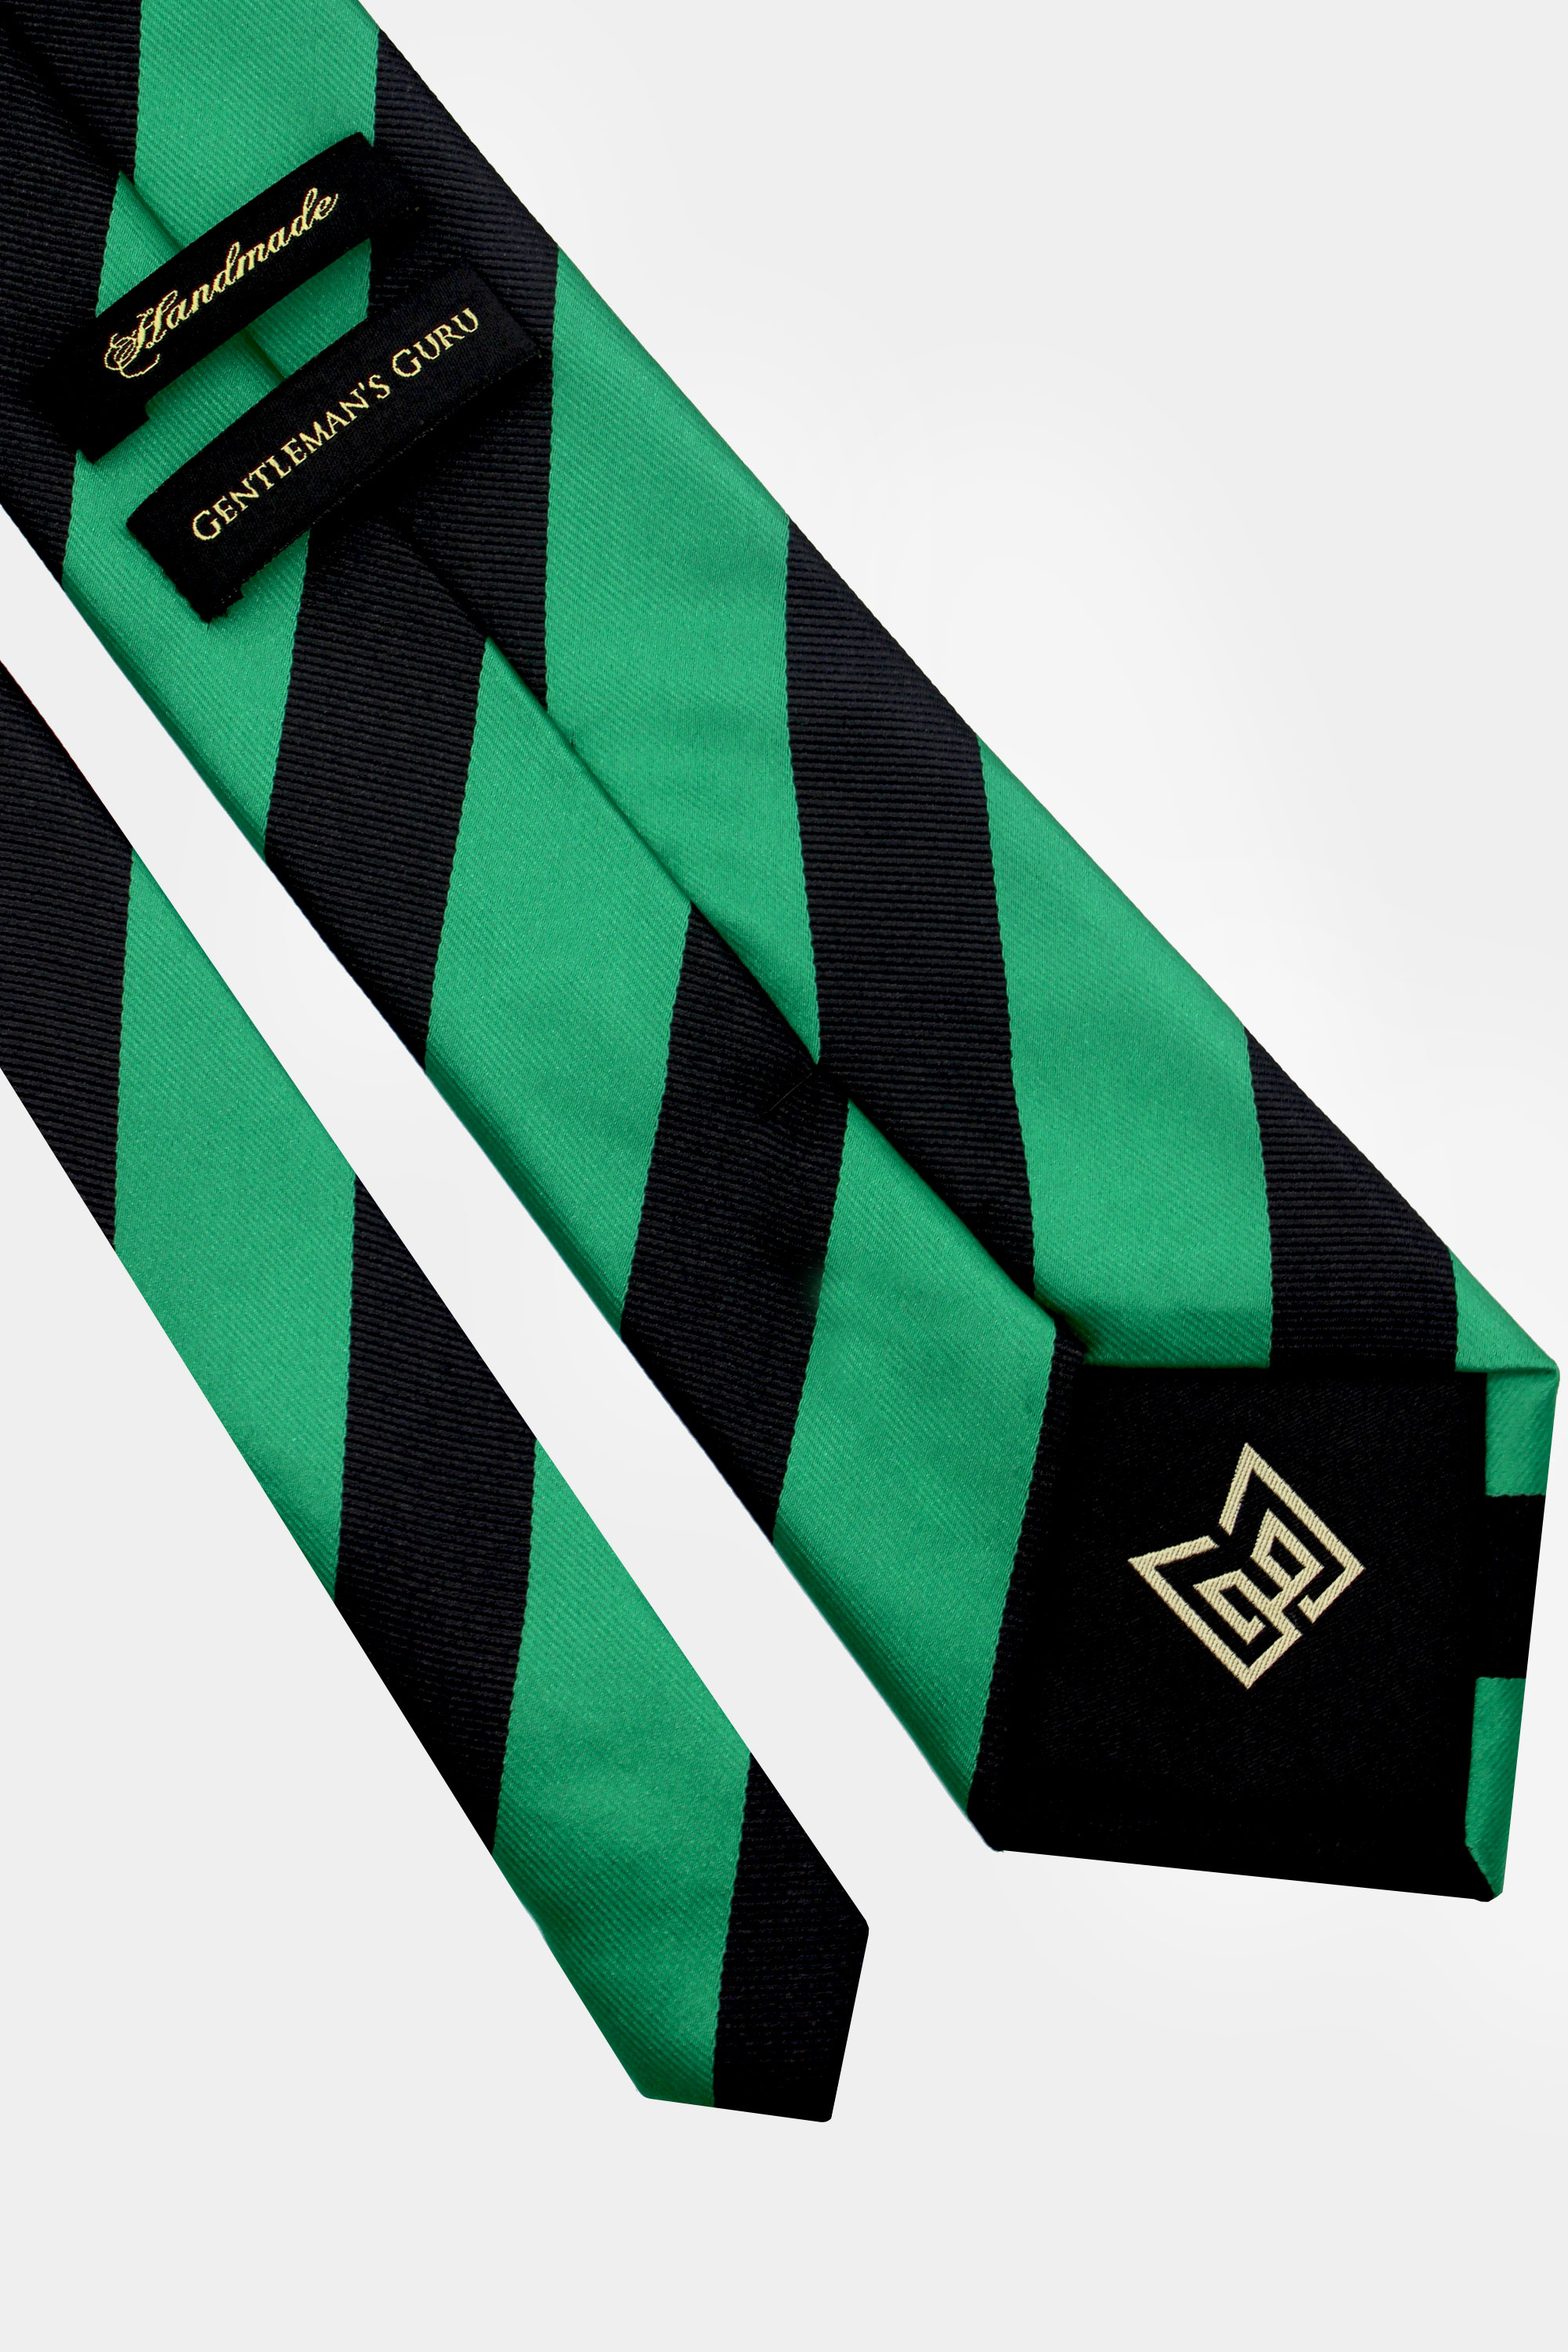 Black-and-Green-Striped-Tie-from-Gentlemansguru.com